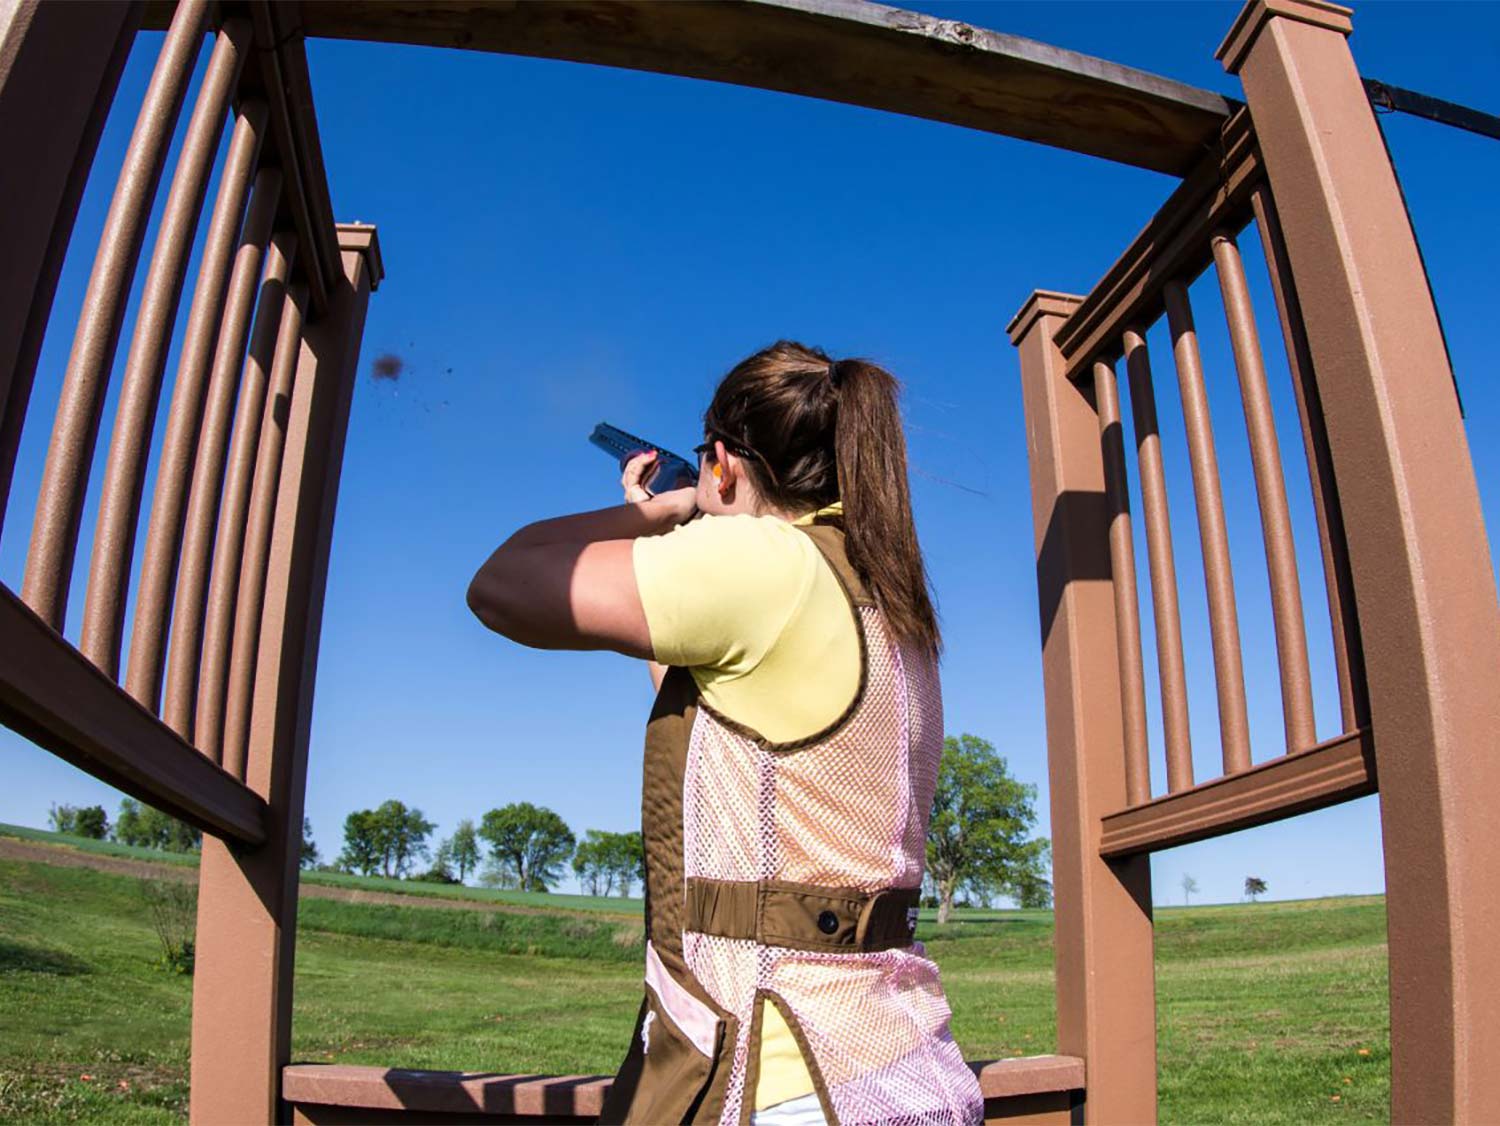 A woman shooter at a range while shooting skeet.